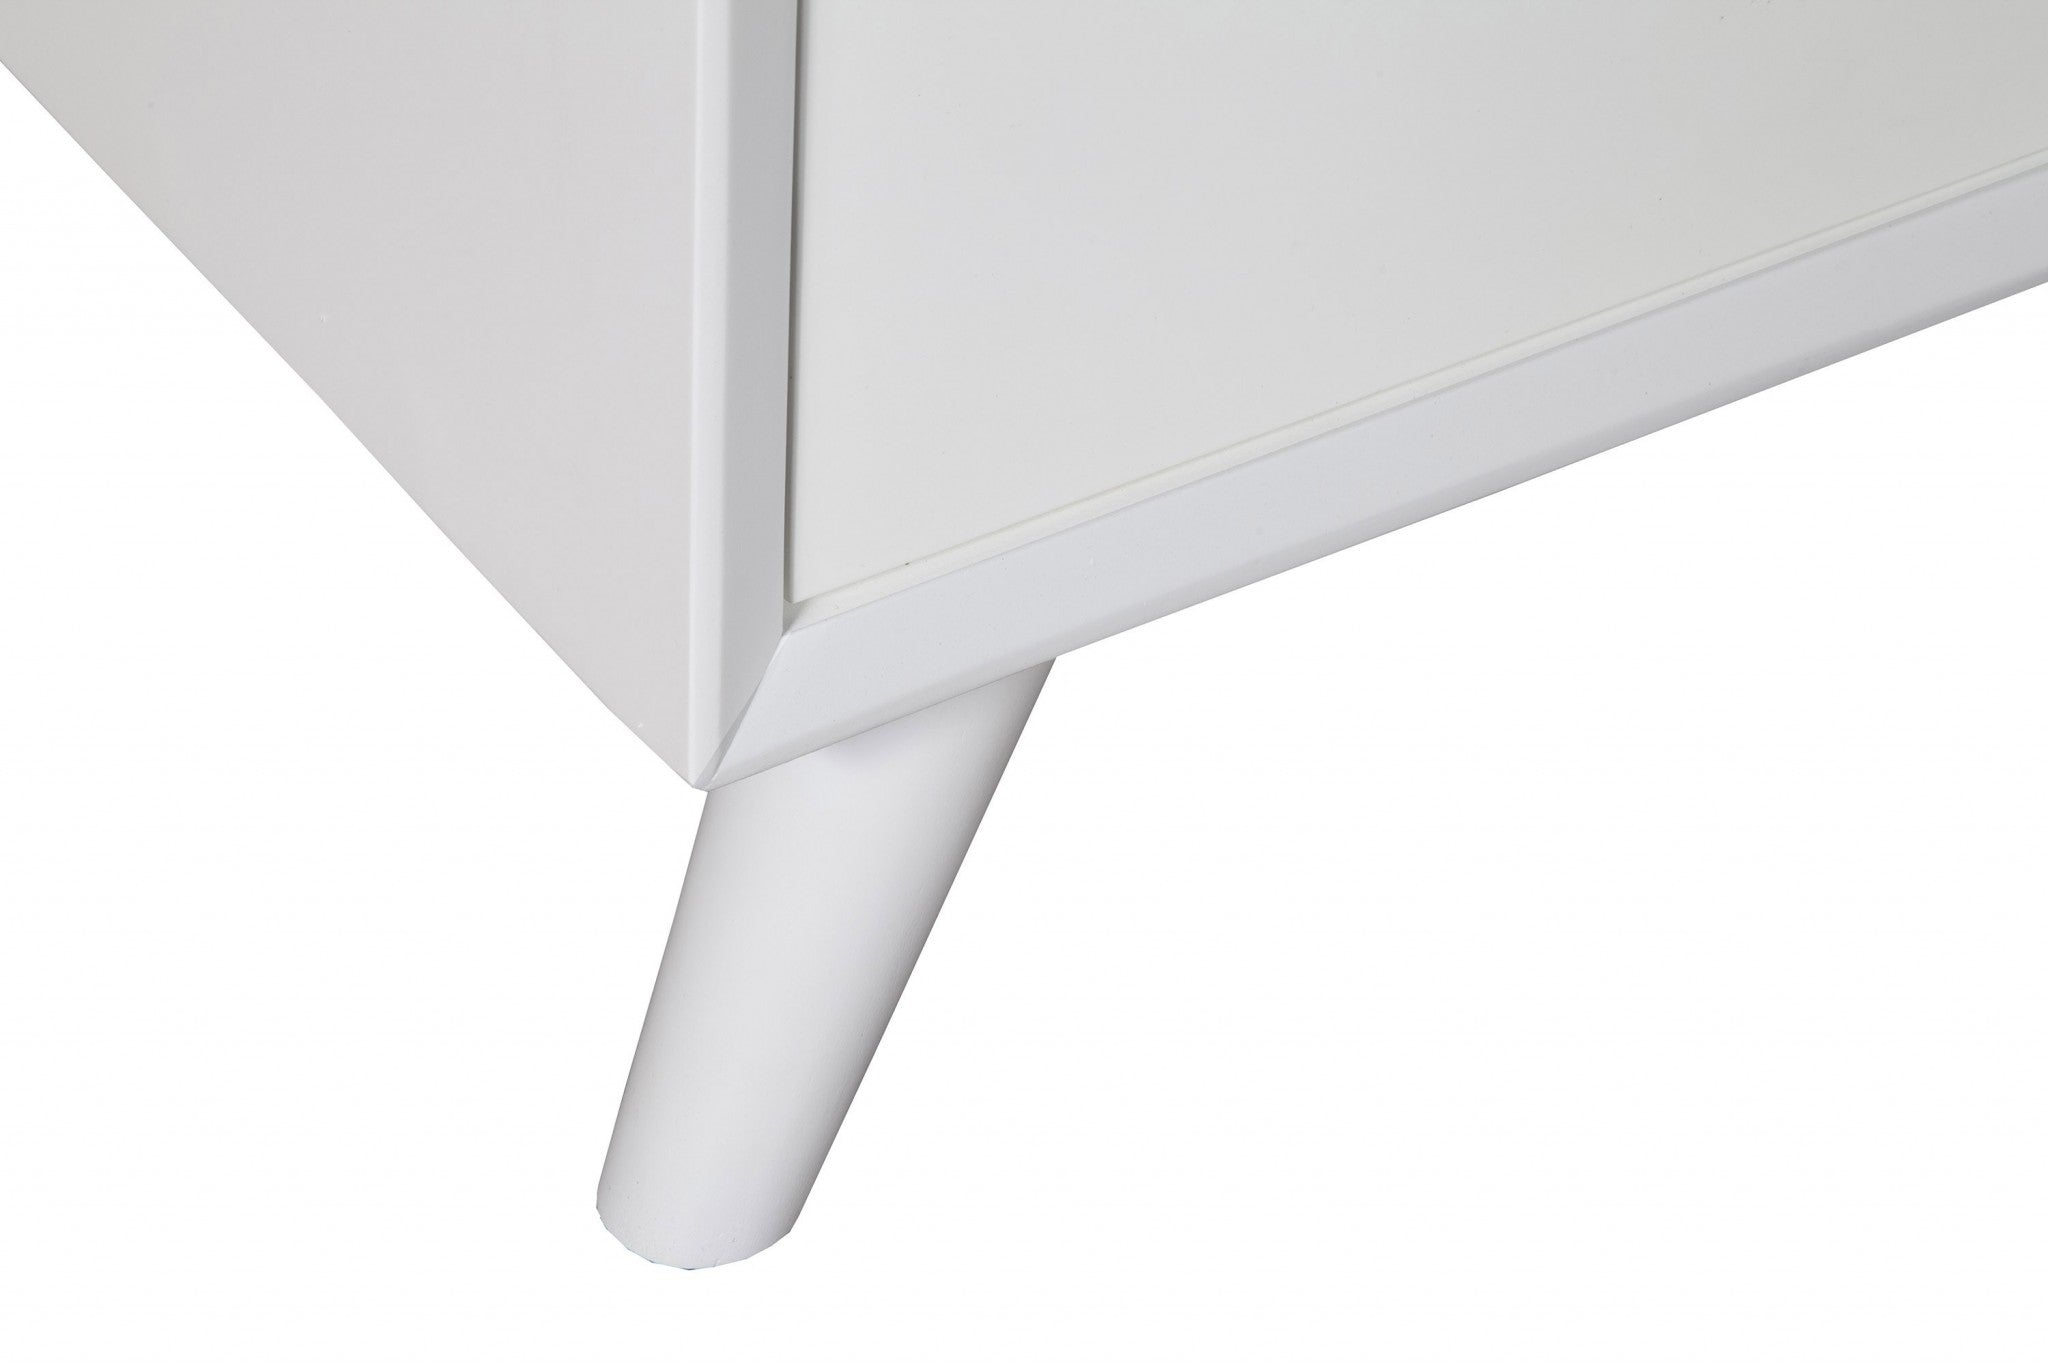 50" White Mahogany Solids & Okoume Veneer Cabinet_Enclosed storage TV Stand